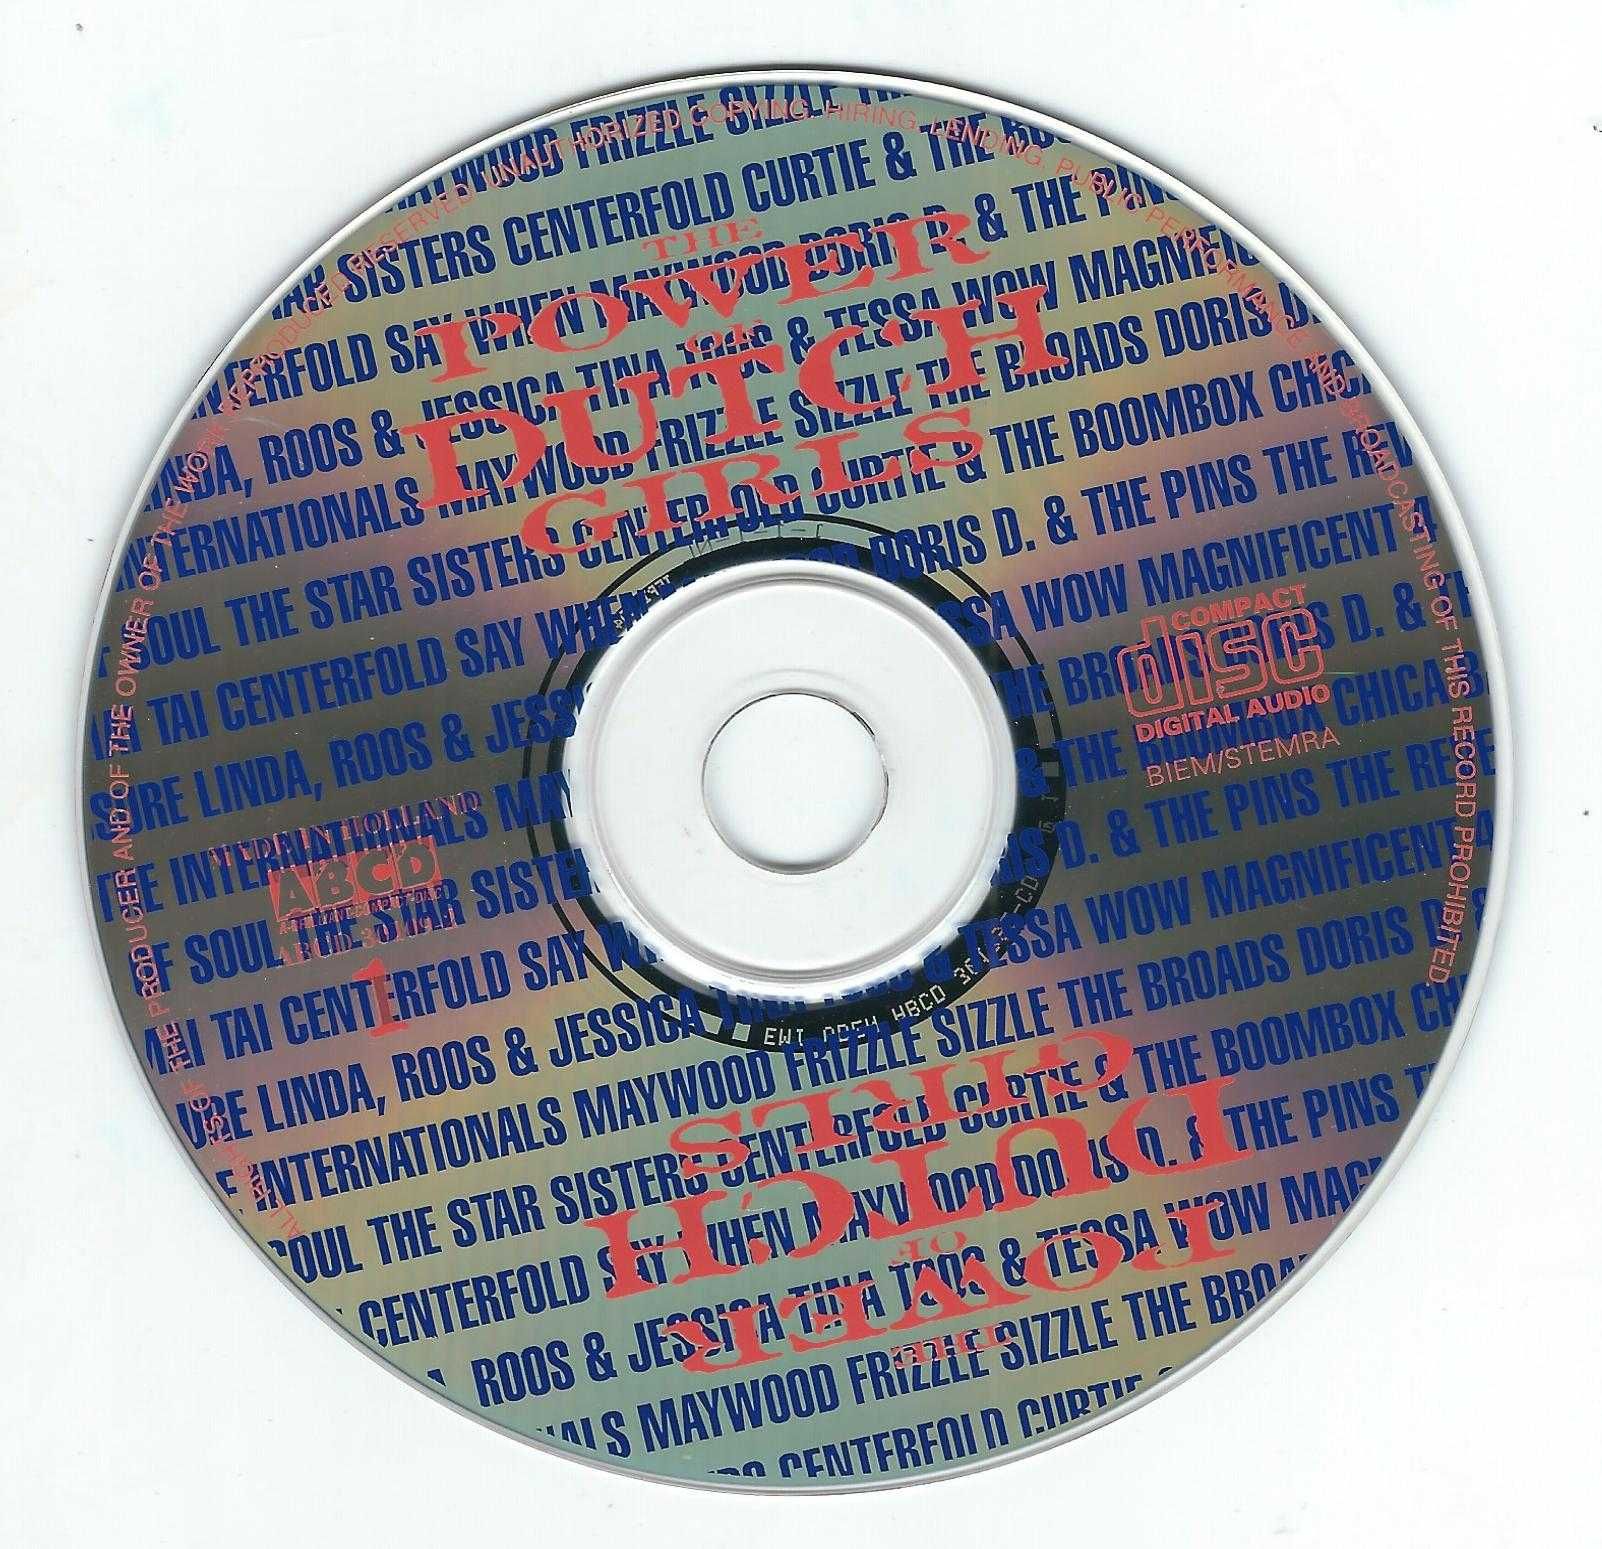 2 CD The Power Of Dutch Girls (1998) Babe,Maywood,Doris D. & The Pins